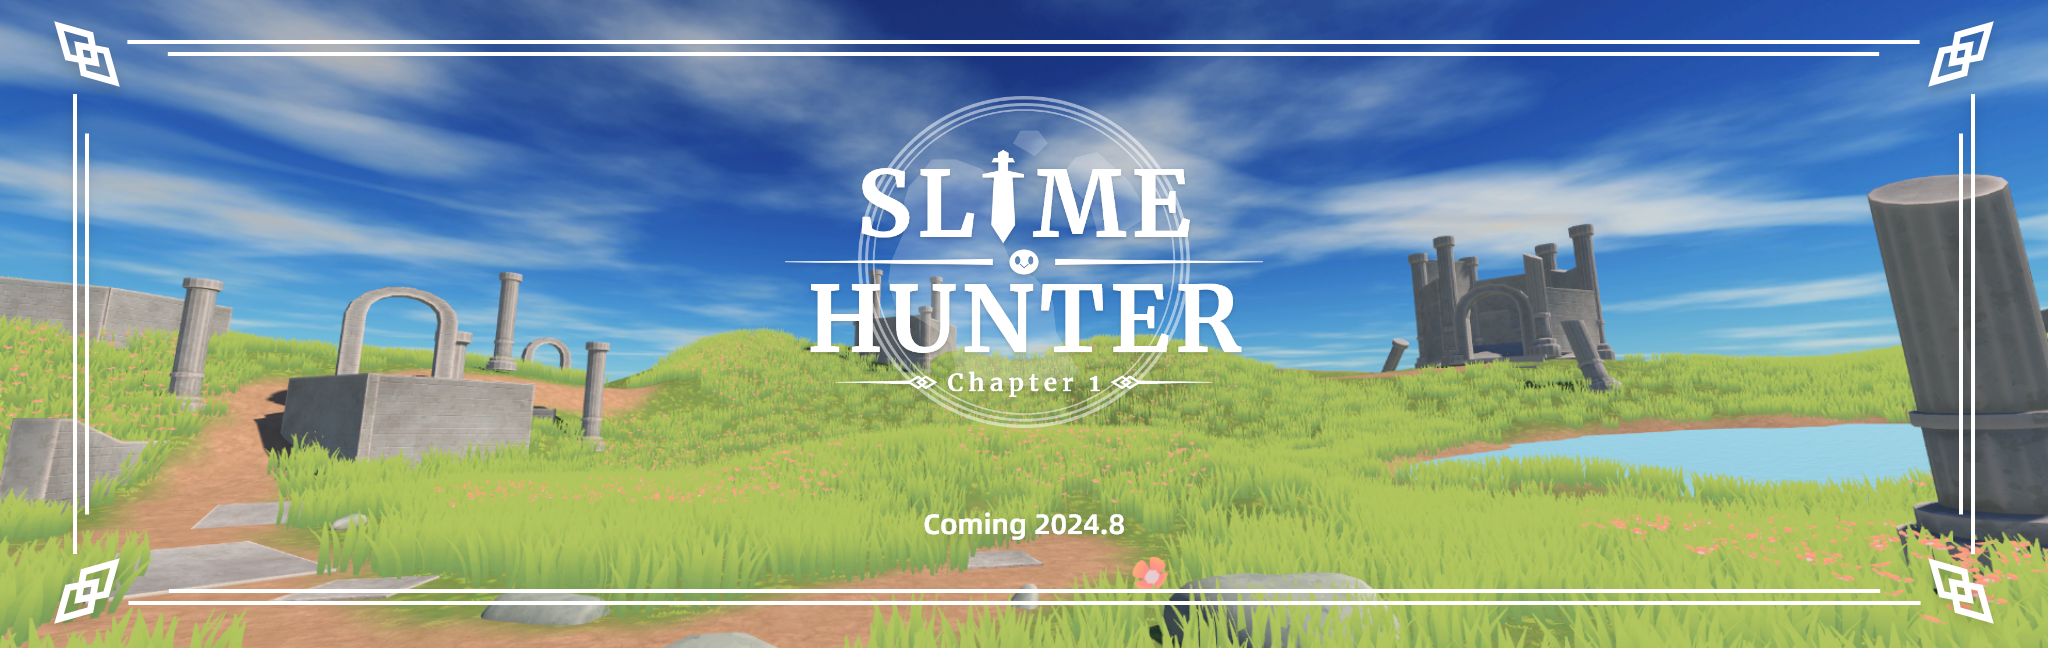 Slime Hunter - Studio Bounce